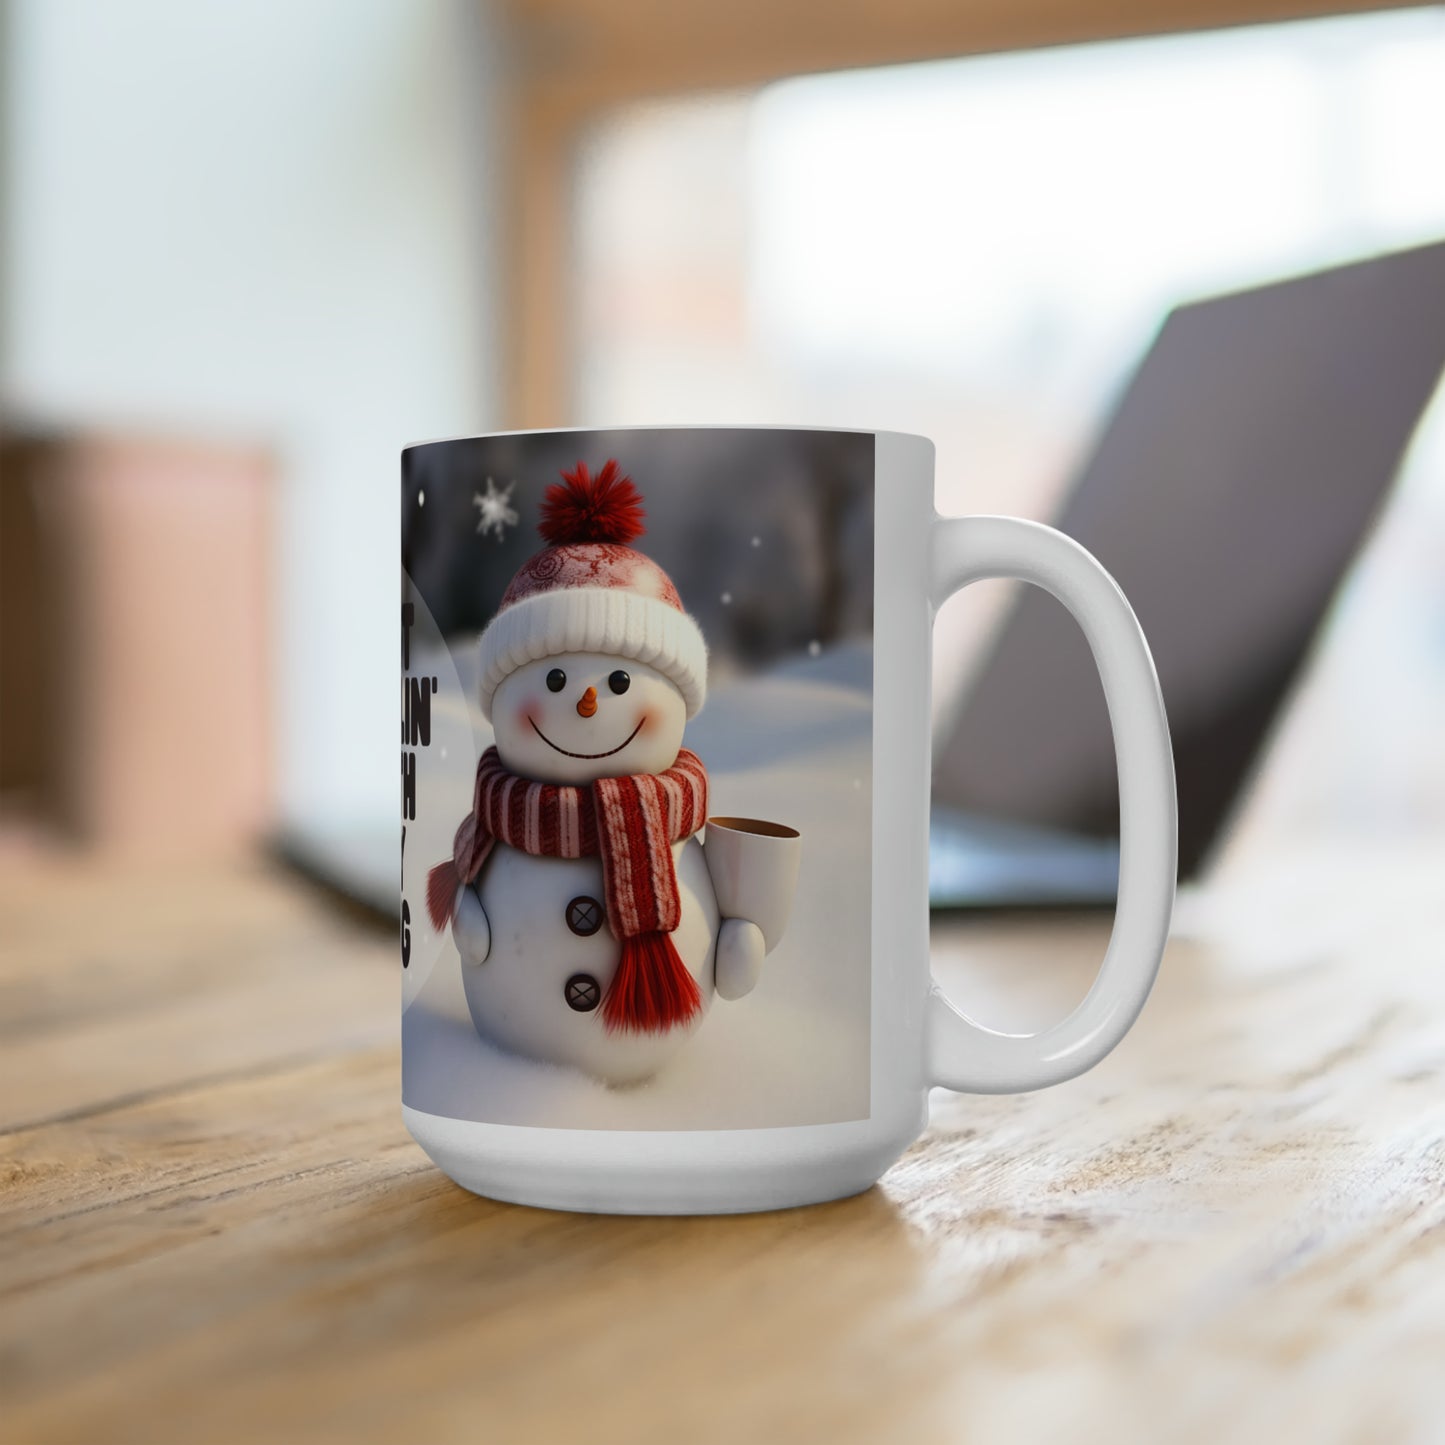 Cute Baby Snowman Just Chillin' with my Mug - 15 oz Coffee Mug